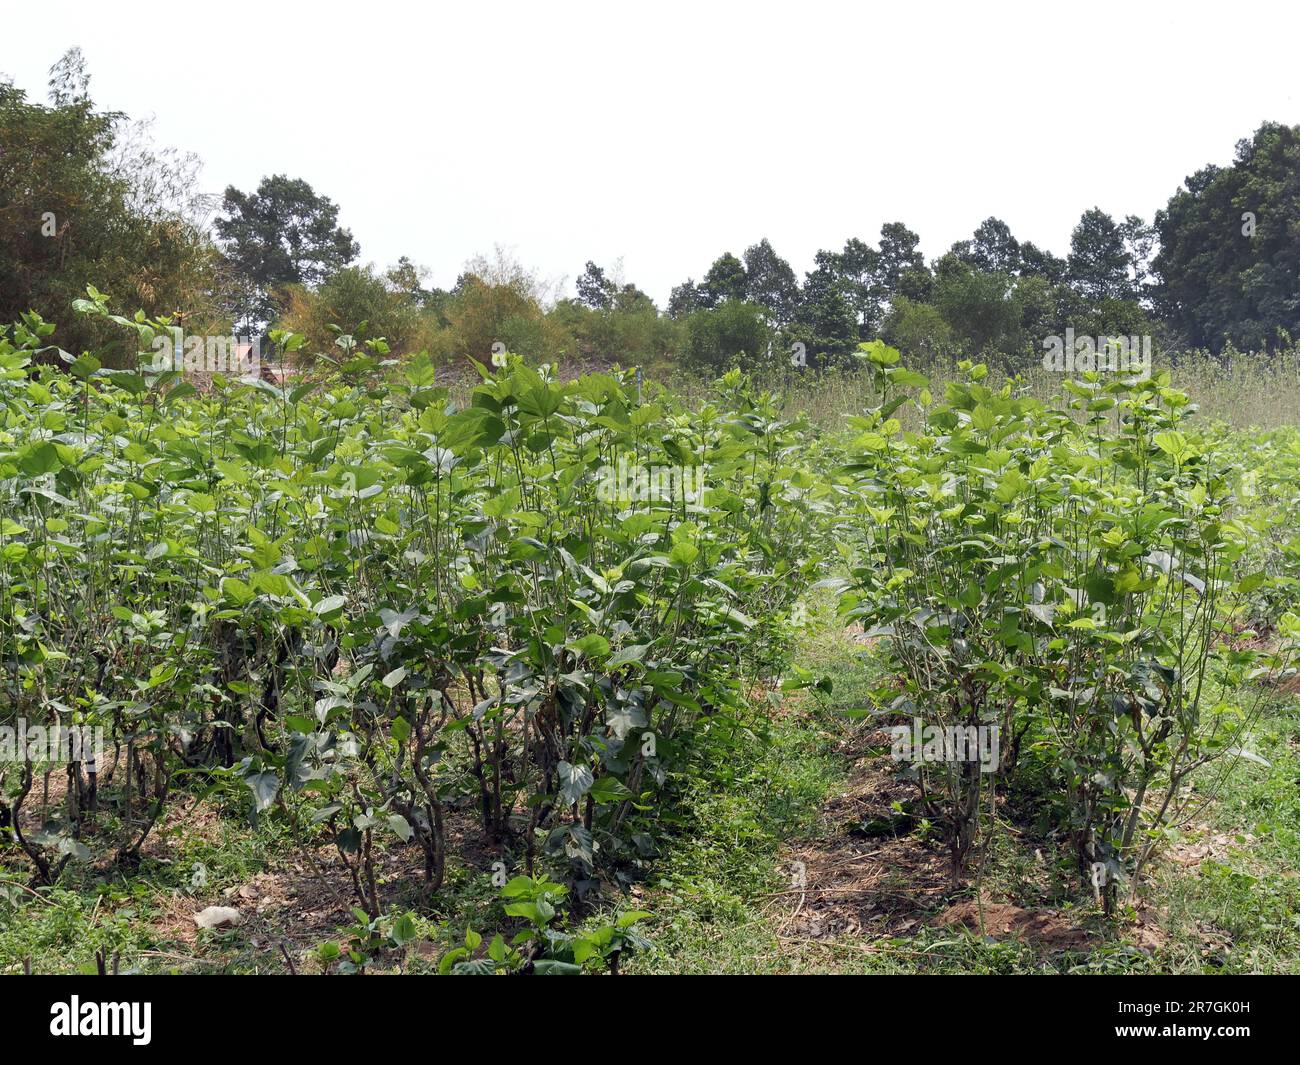 Maulbeerplantage, morus alba, Seam Reap Provinz, Handwerk, Seidenarbeit, Seidenraupenzucht, Kambodscha Stockfoto